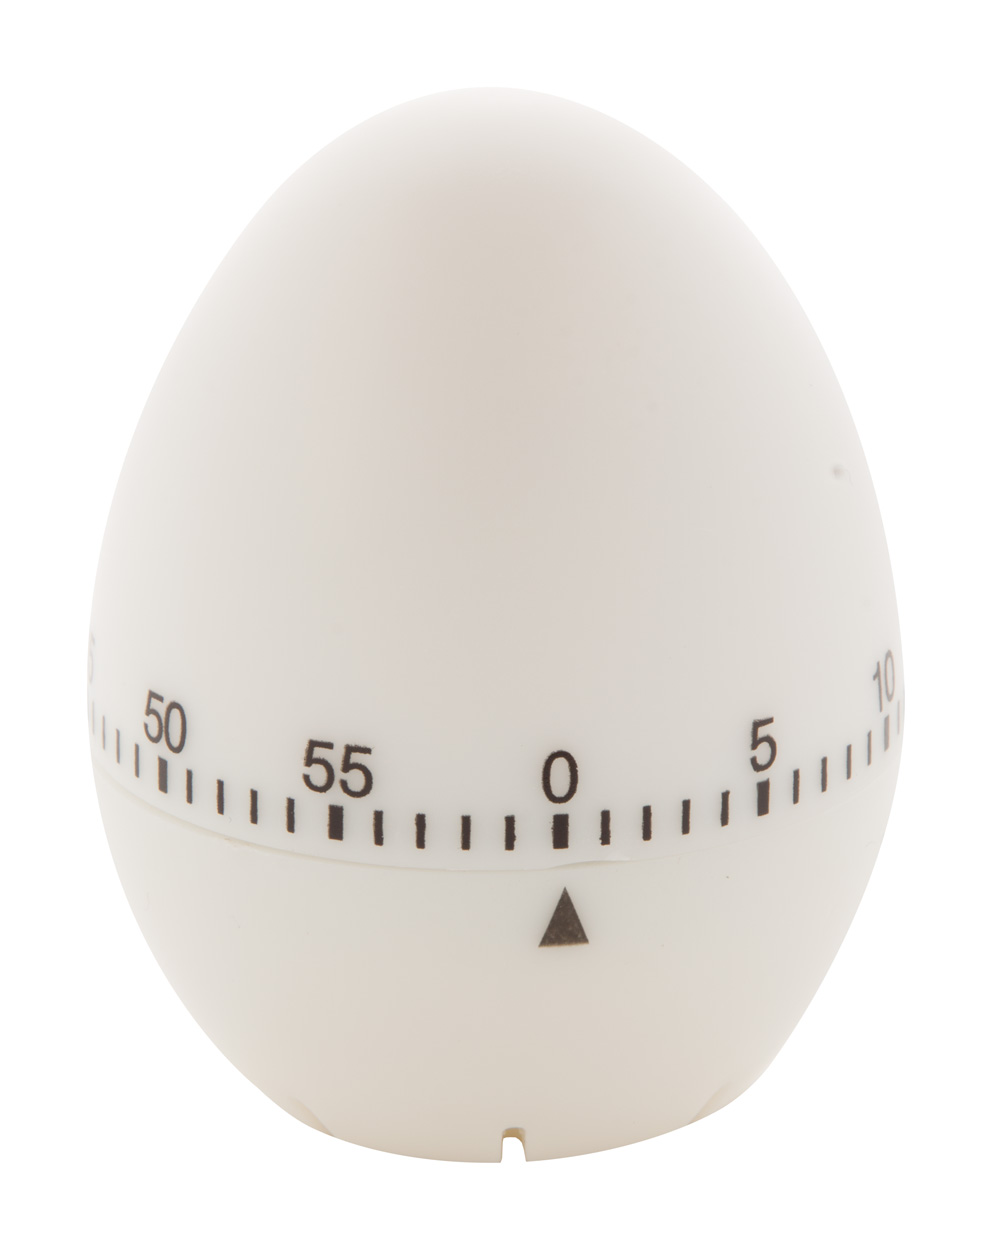 Plastic kitchen timer REVEY in the shape of an egg